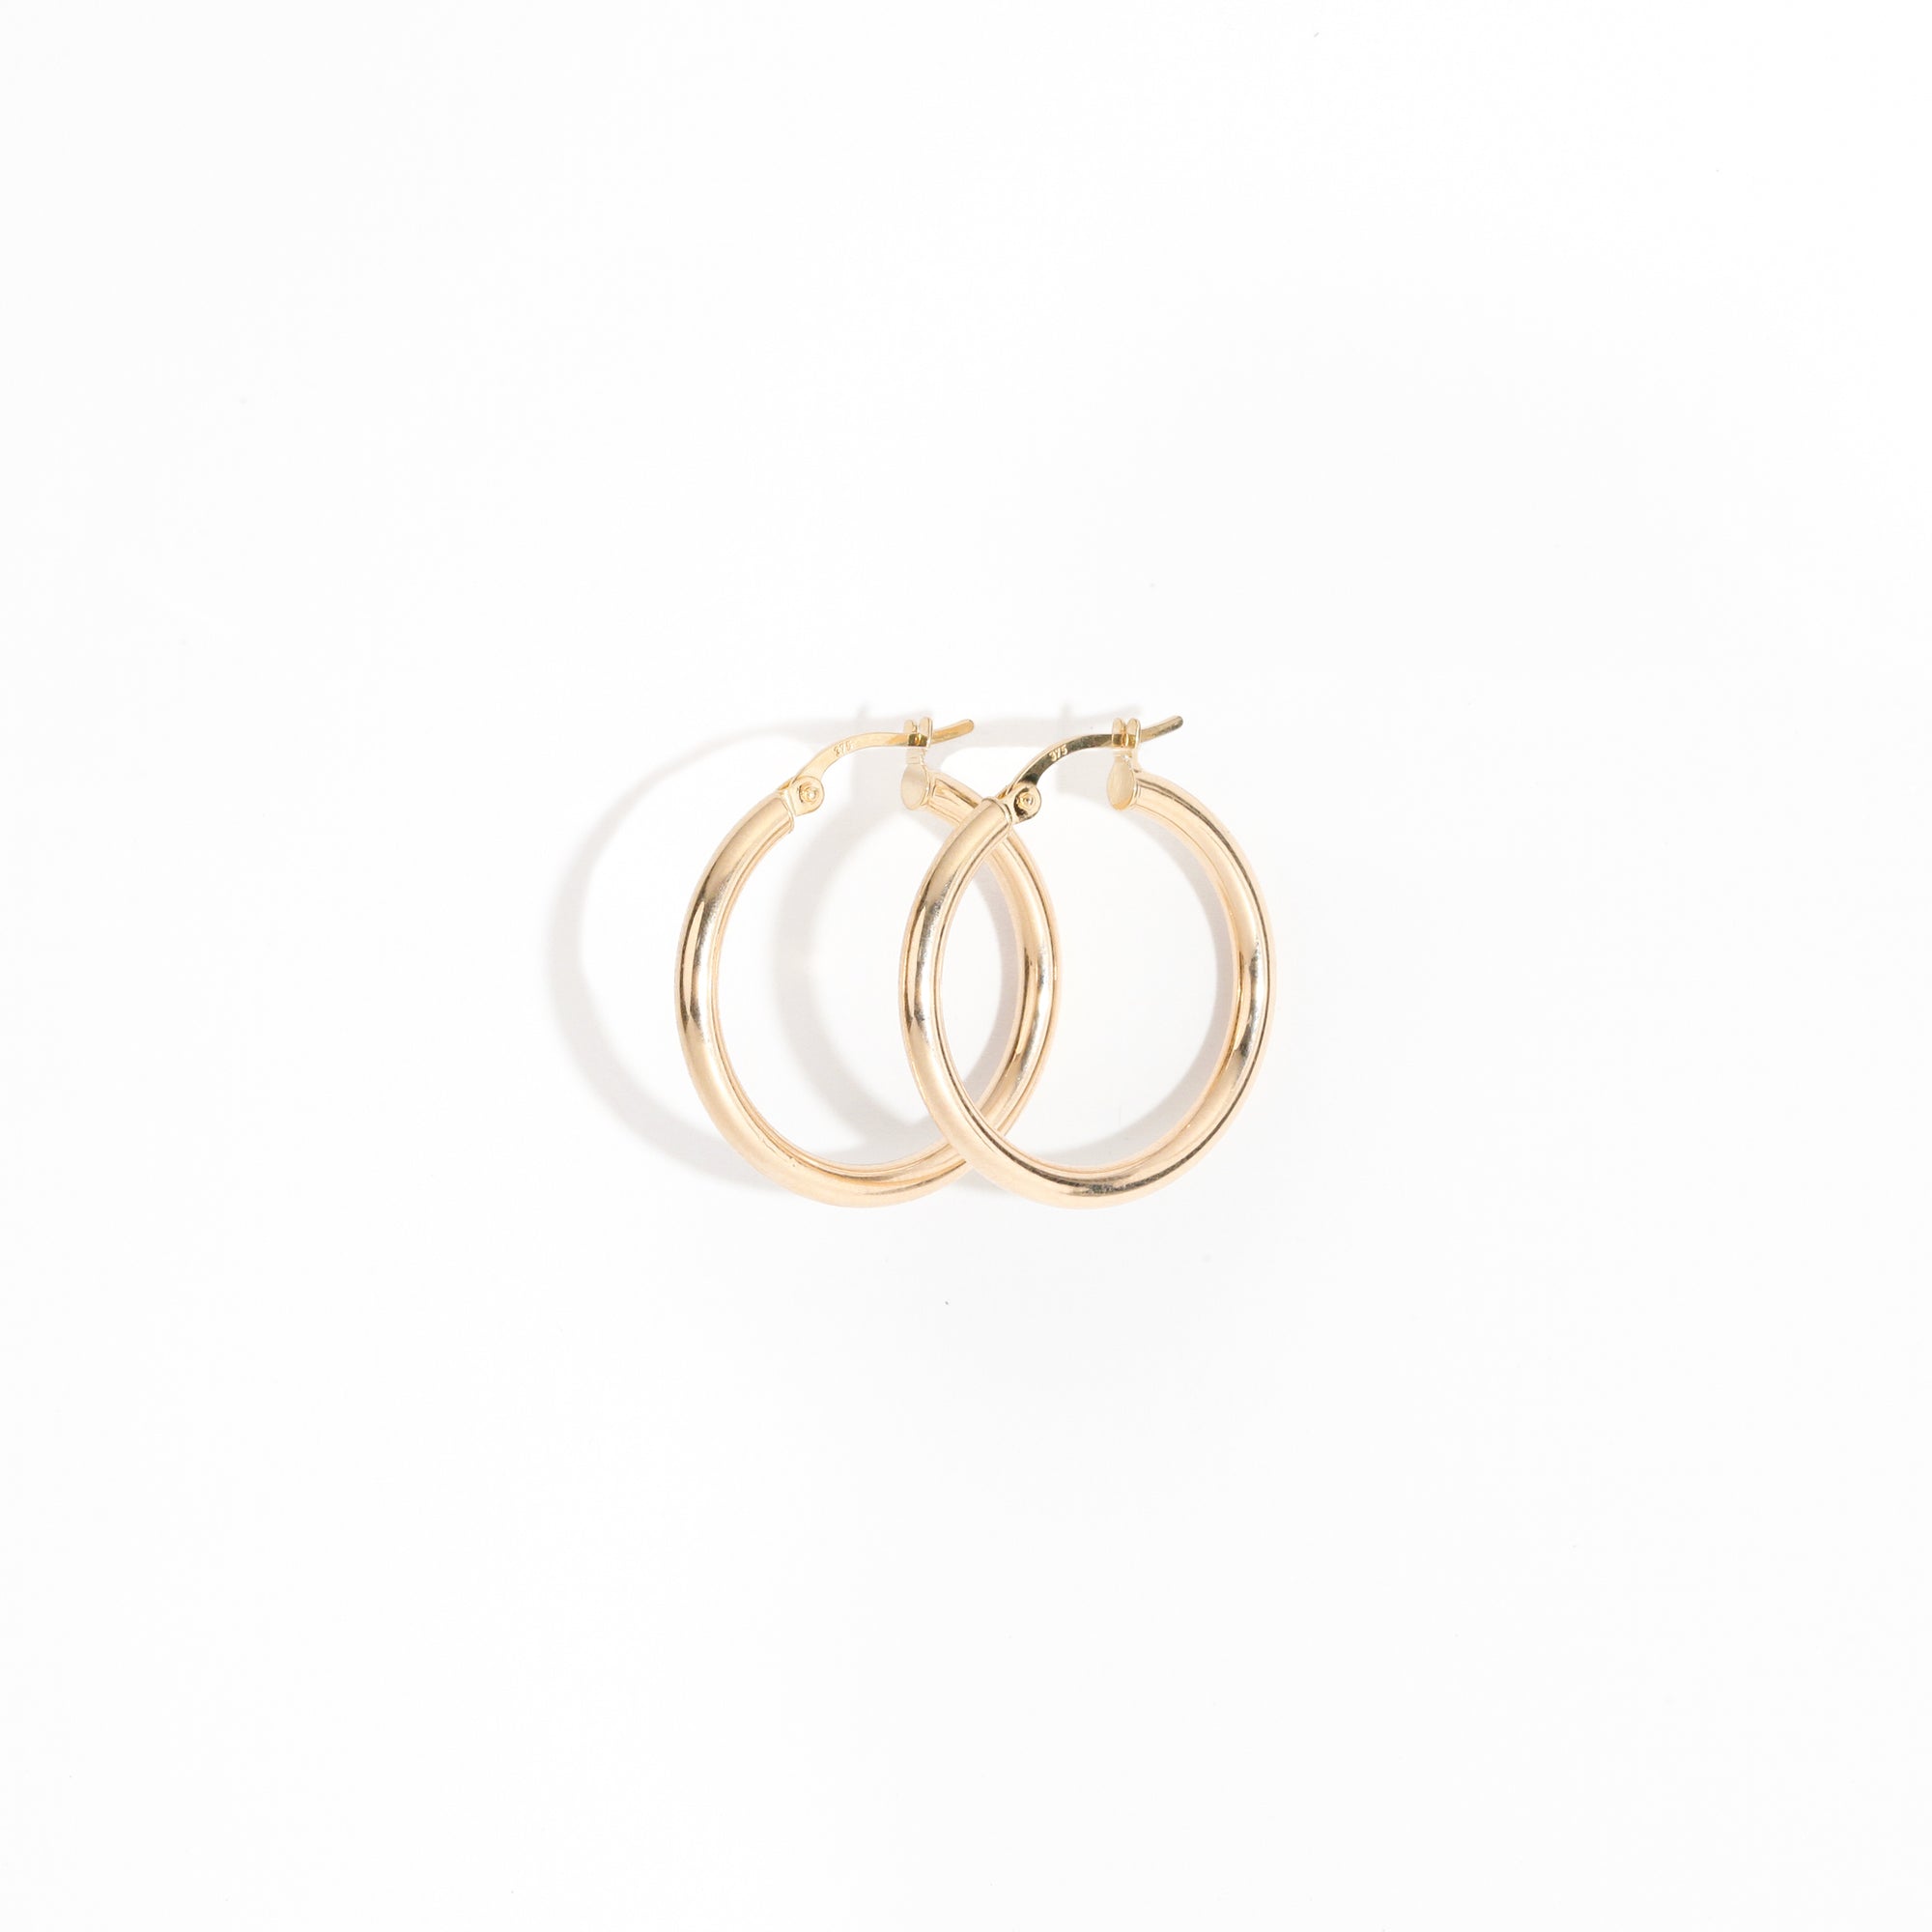  Classic 9 carat gold hoop earrings. 